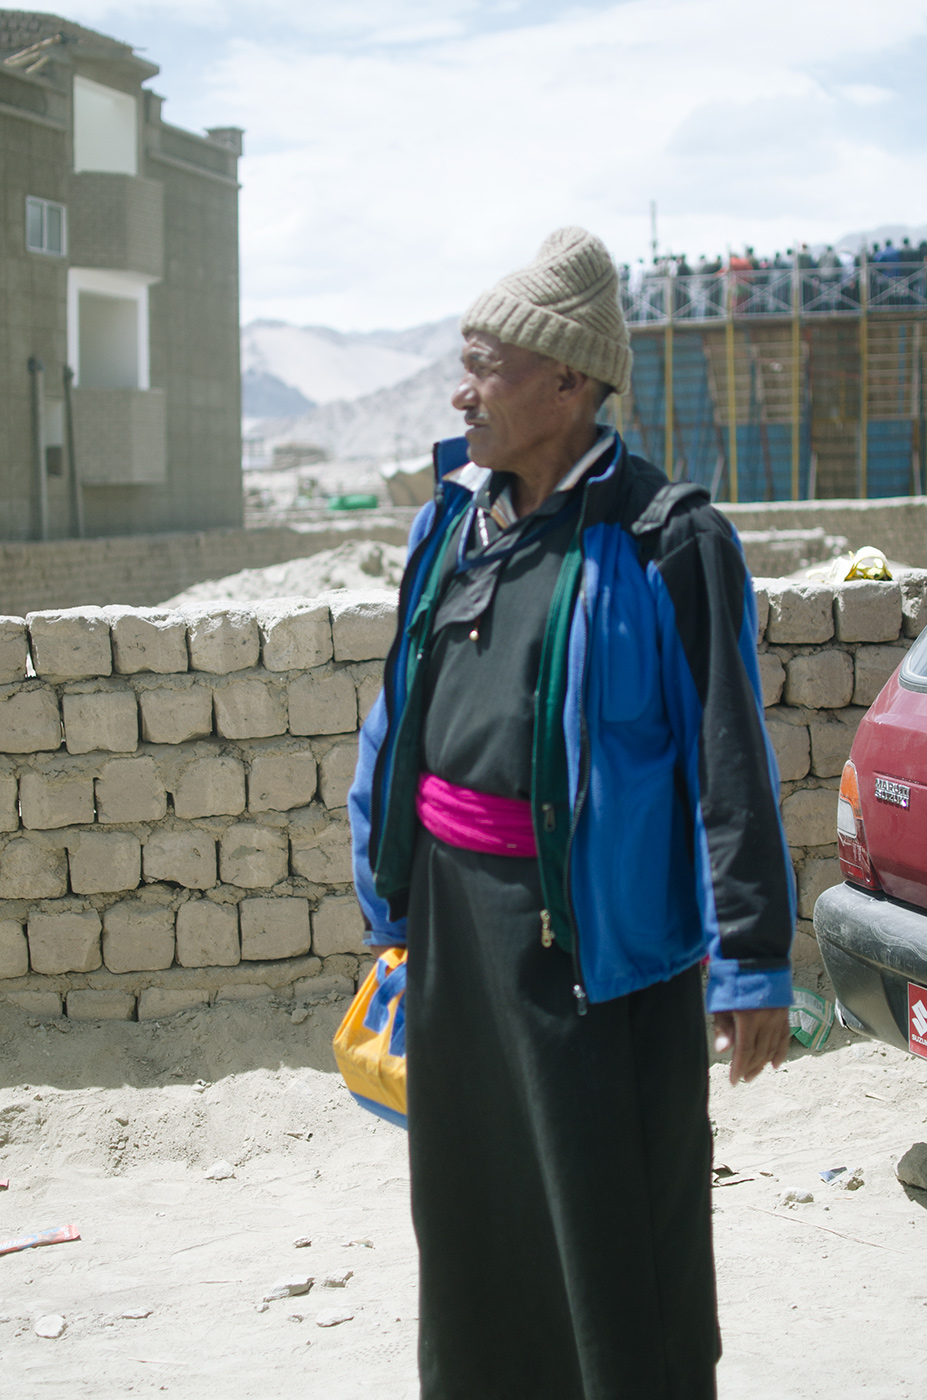 ladakhi man on street